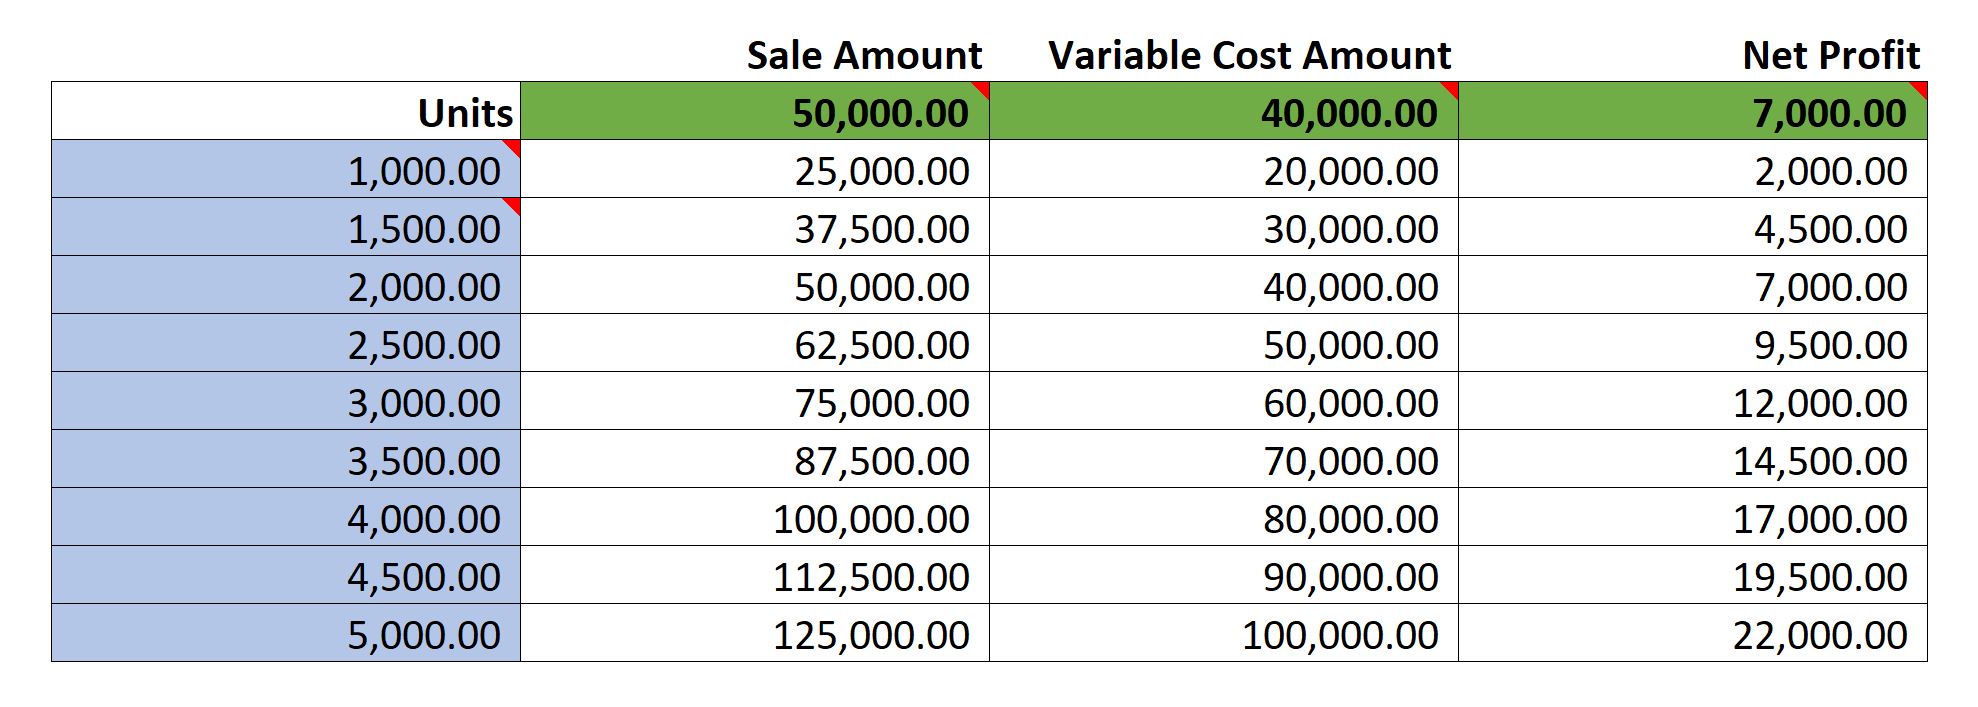 Data Table is created based on input range of values